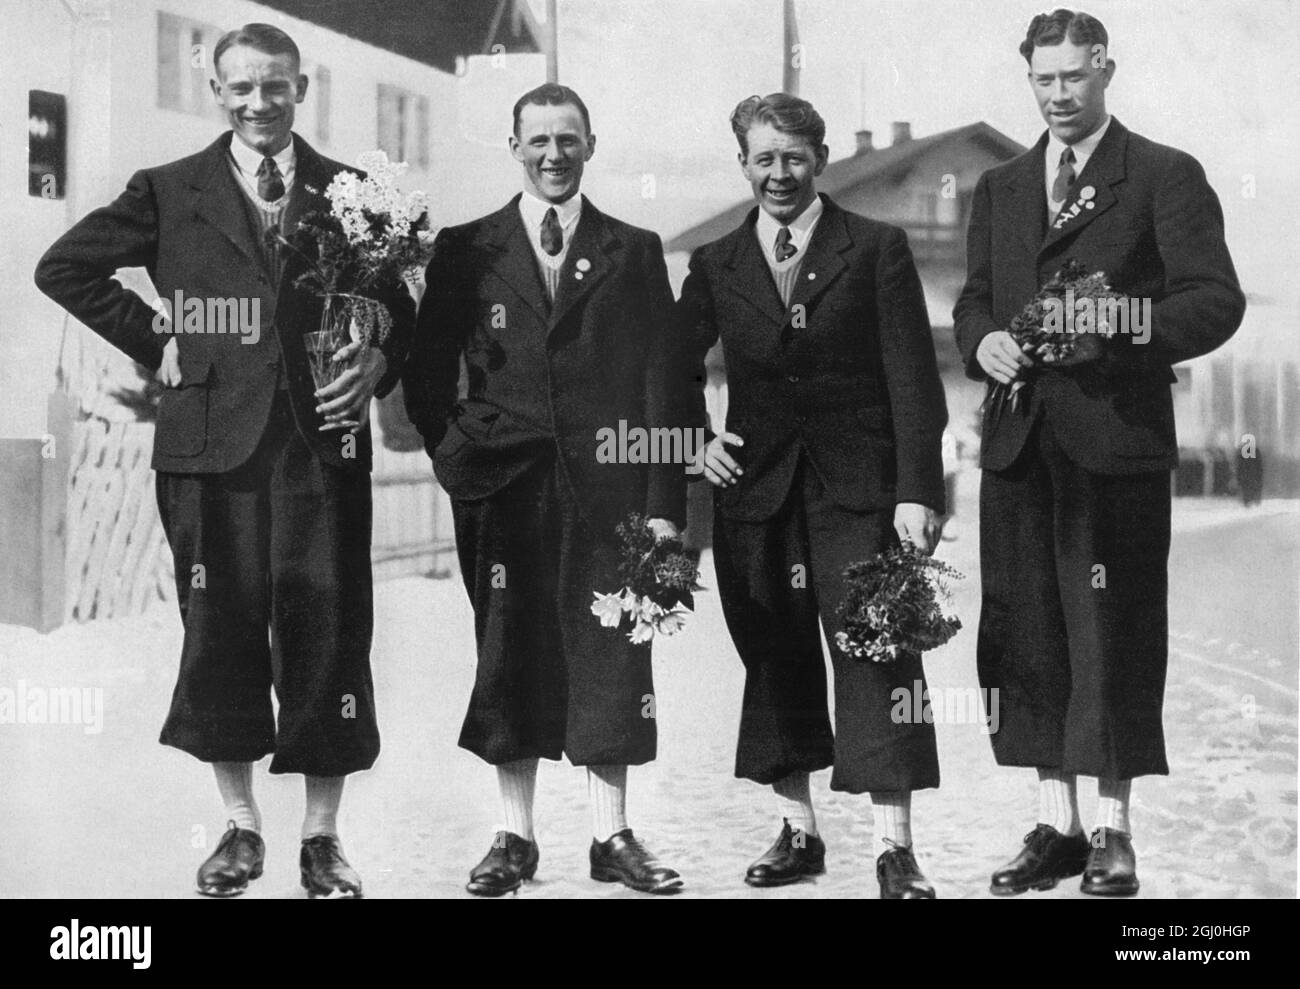 1936 Giochi Olimpici invernali Garmisch - Partenkirchen, Germania la Svezia ha preso i primi quattro posti nel 50 km Men's Cross Country Sci evento. (L-R) Elis Wiklund (medaglia d'oro); Axel Wikström (medaglia d'argento); Nils Joel Englund (medaglia di bronzo); Hjalmar Karl Bergström (4a) ©TopFoto Foto Stock